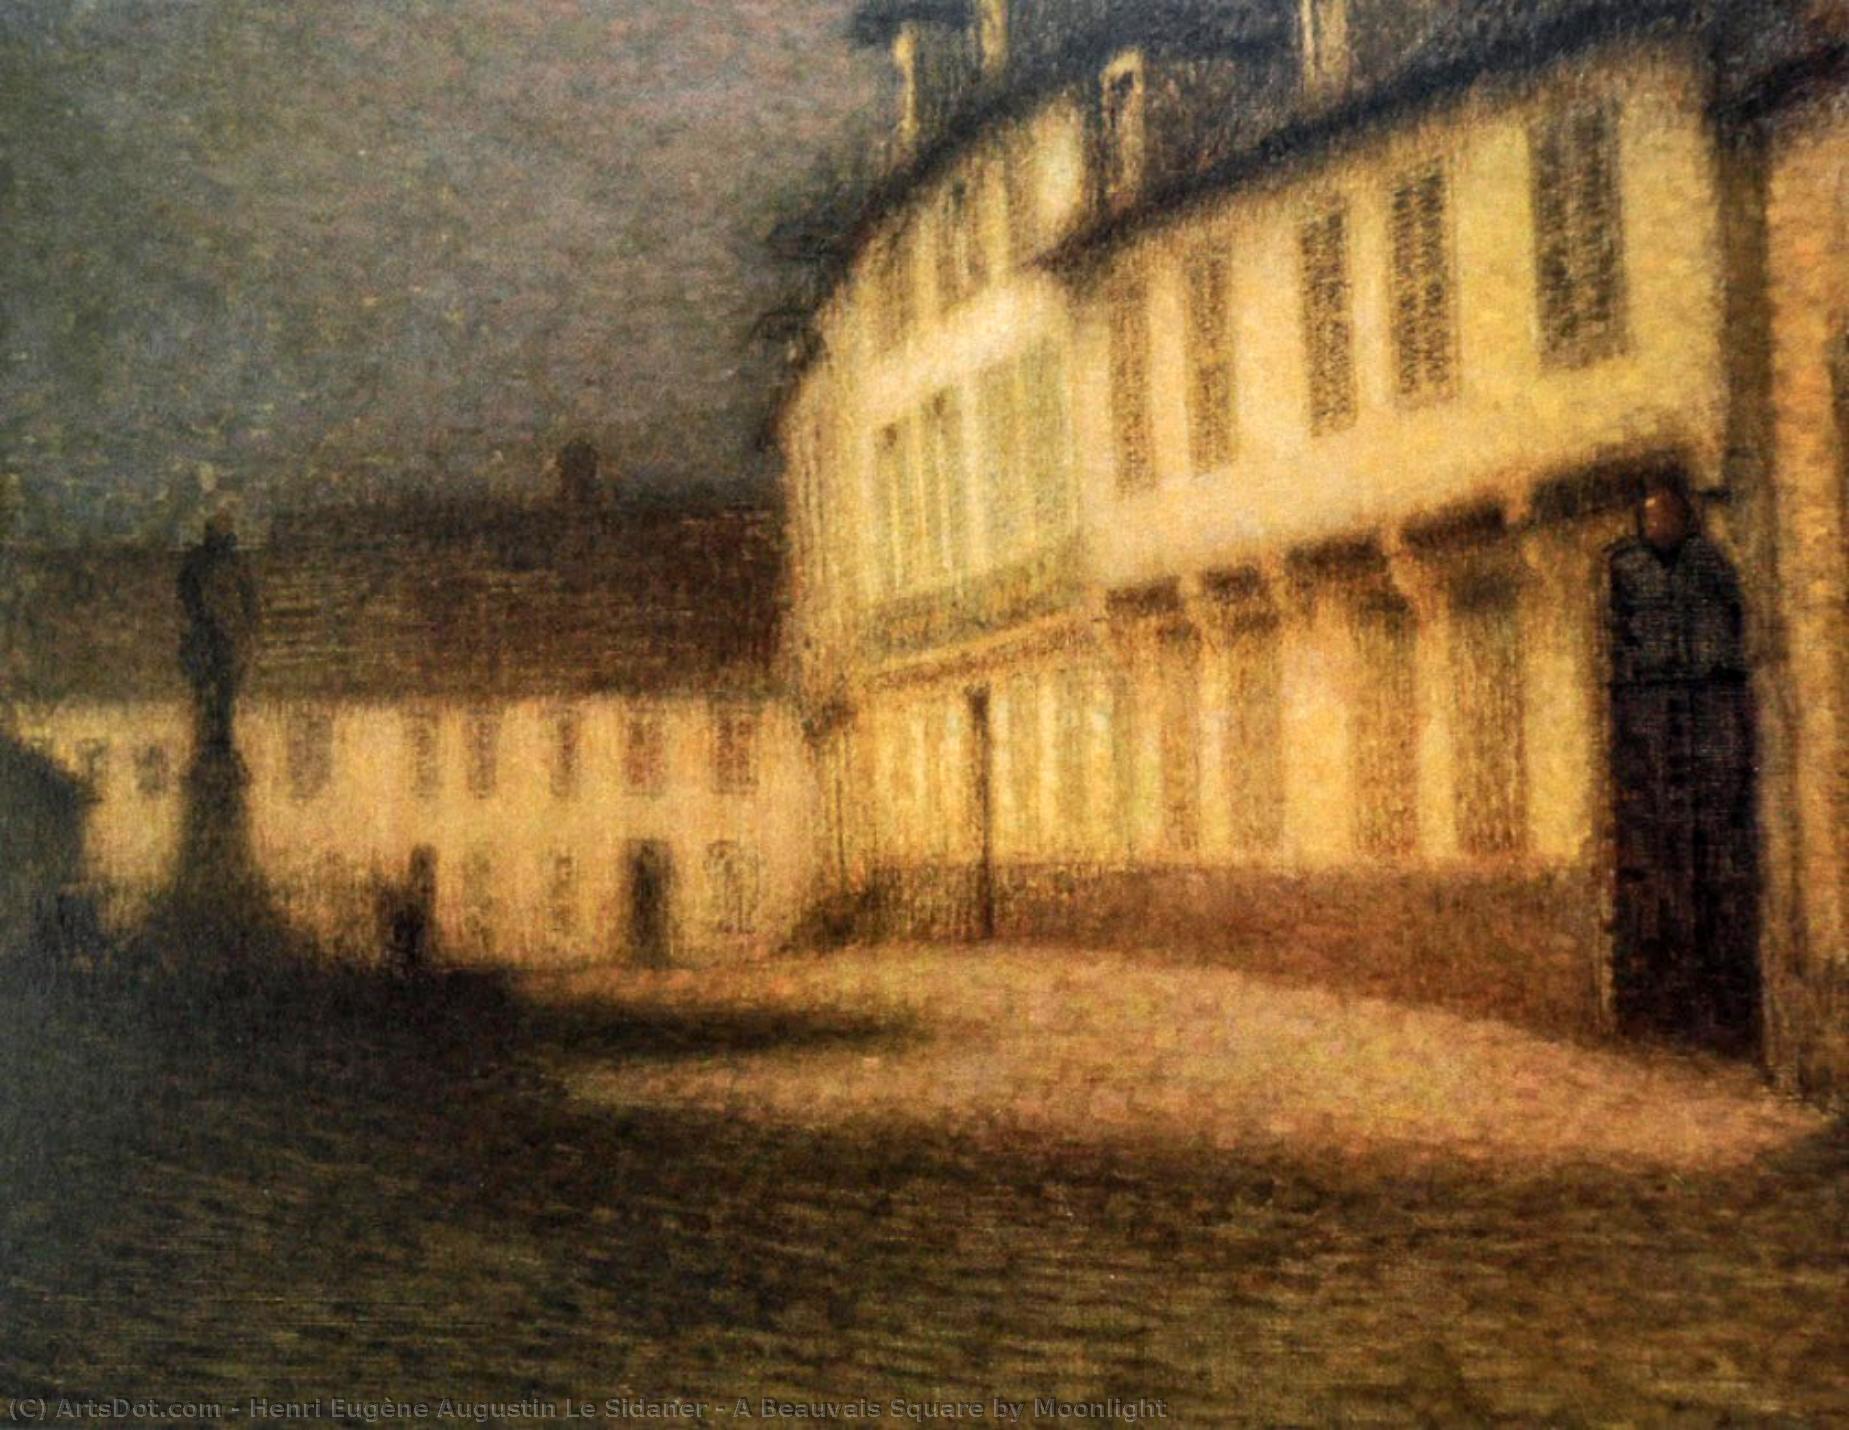 Buy Museum Art Reproductions A Beauvais Square by Moonlight, 1900 by Henri Eugène Augustin Le Sidaner (1862-1939, Mauritius) | ArtsDot.com